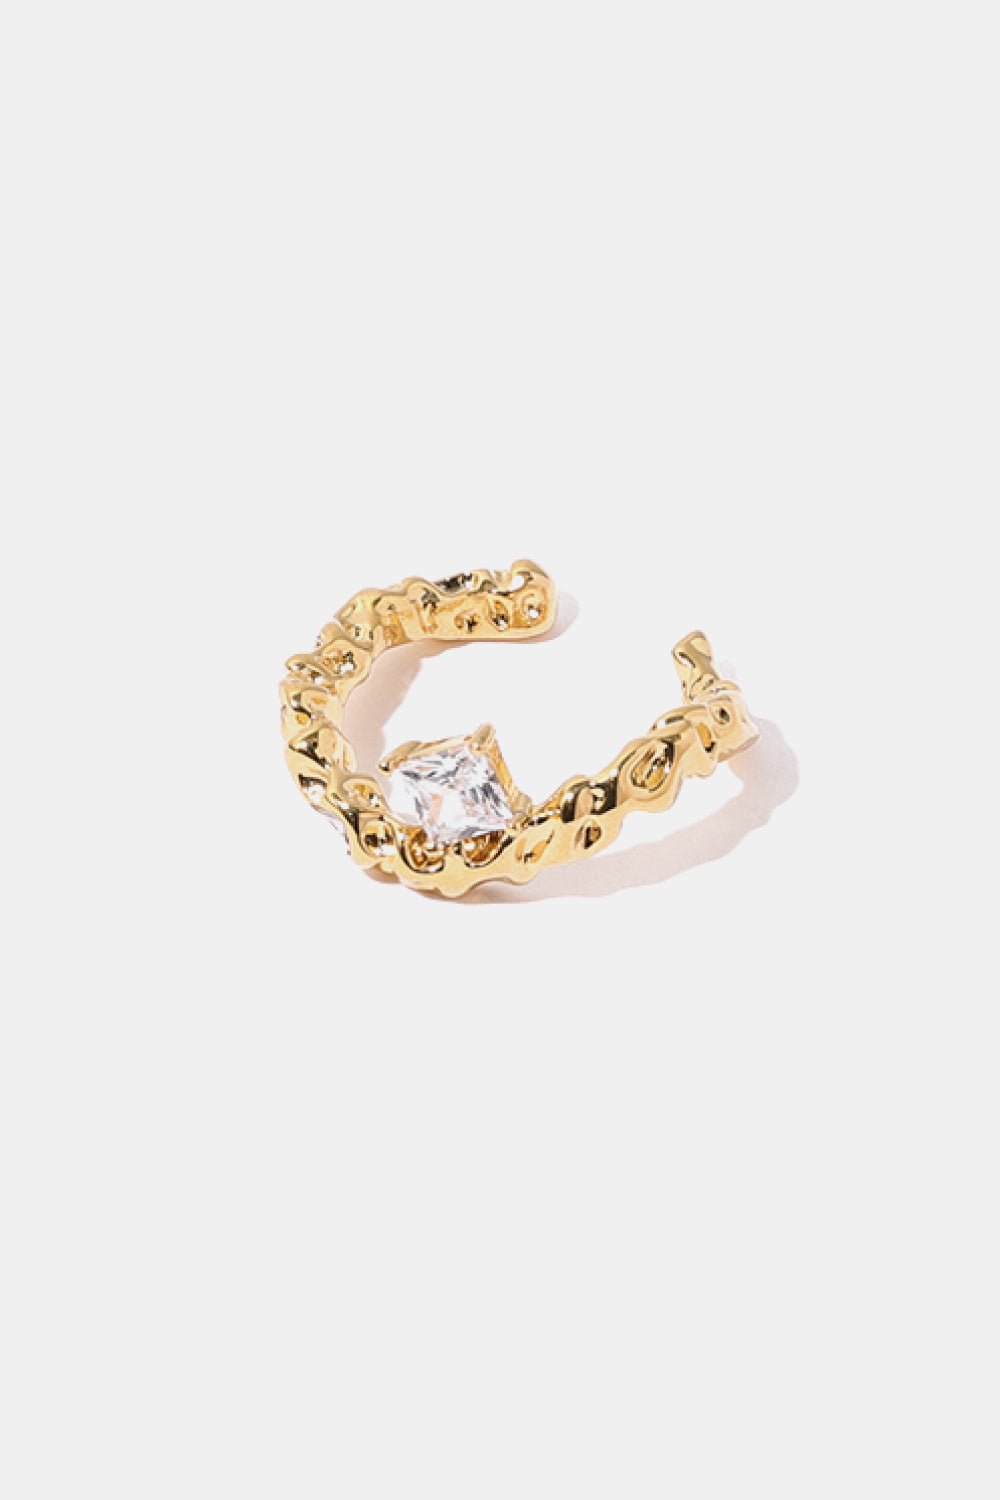 Inlaid Rhinestone Ring in Gold